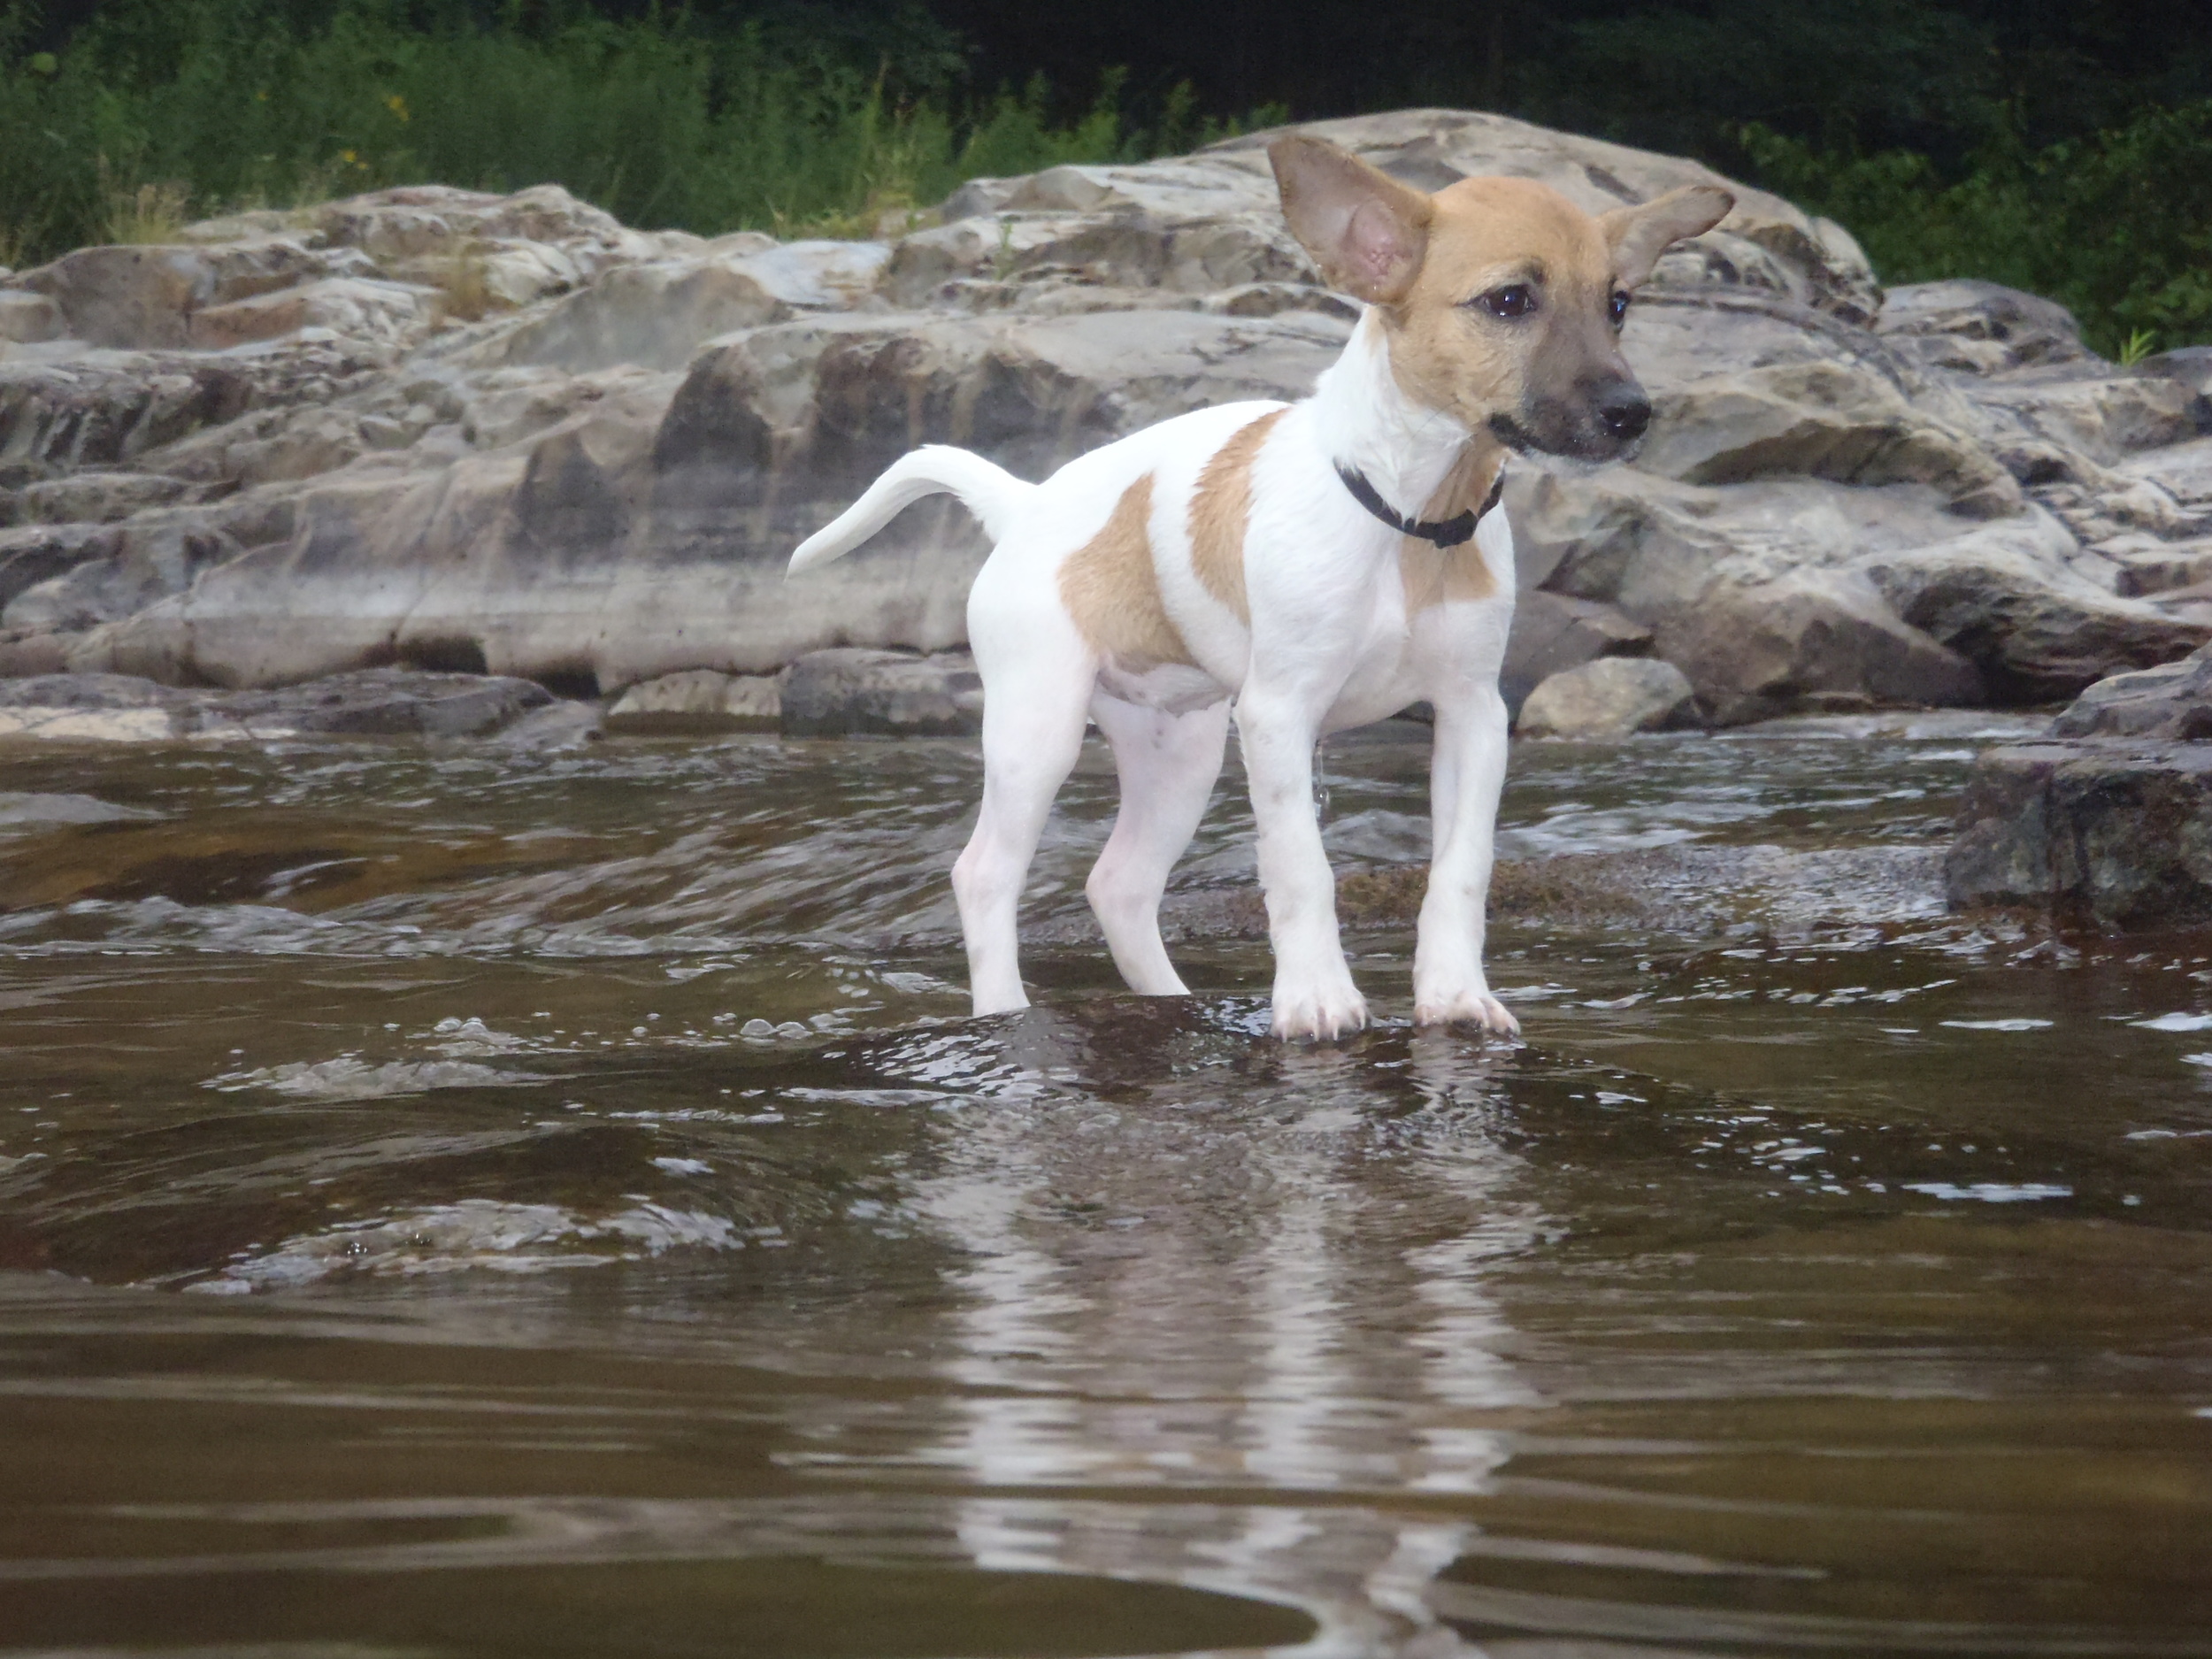 River pup, not afraid!